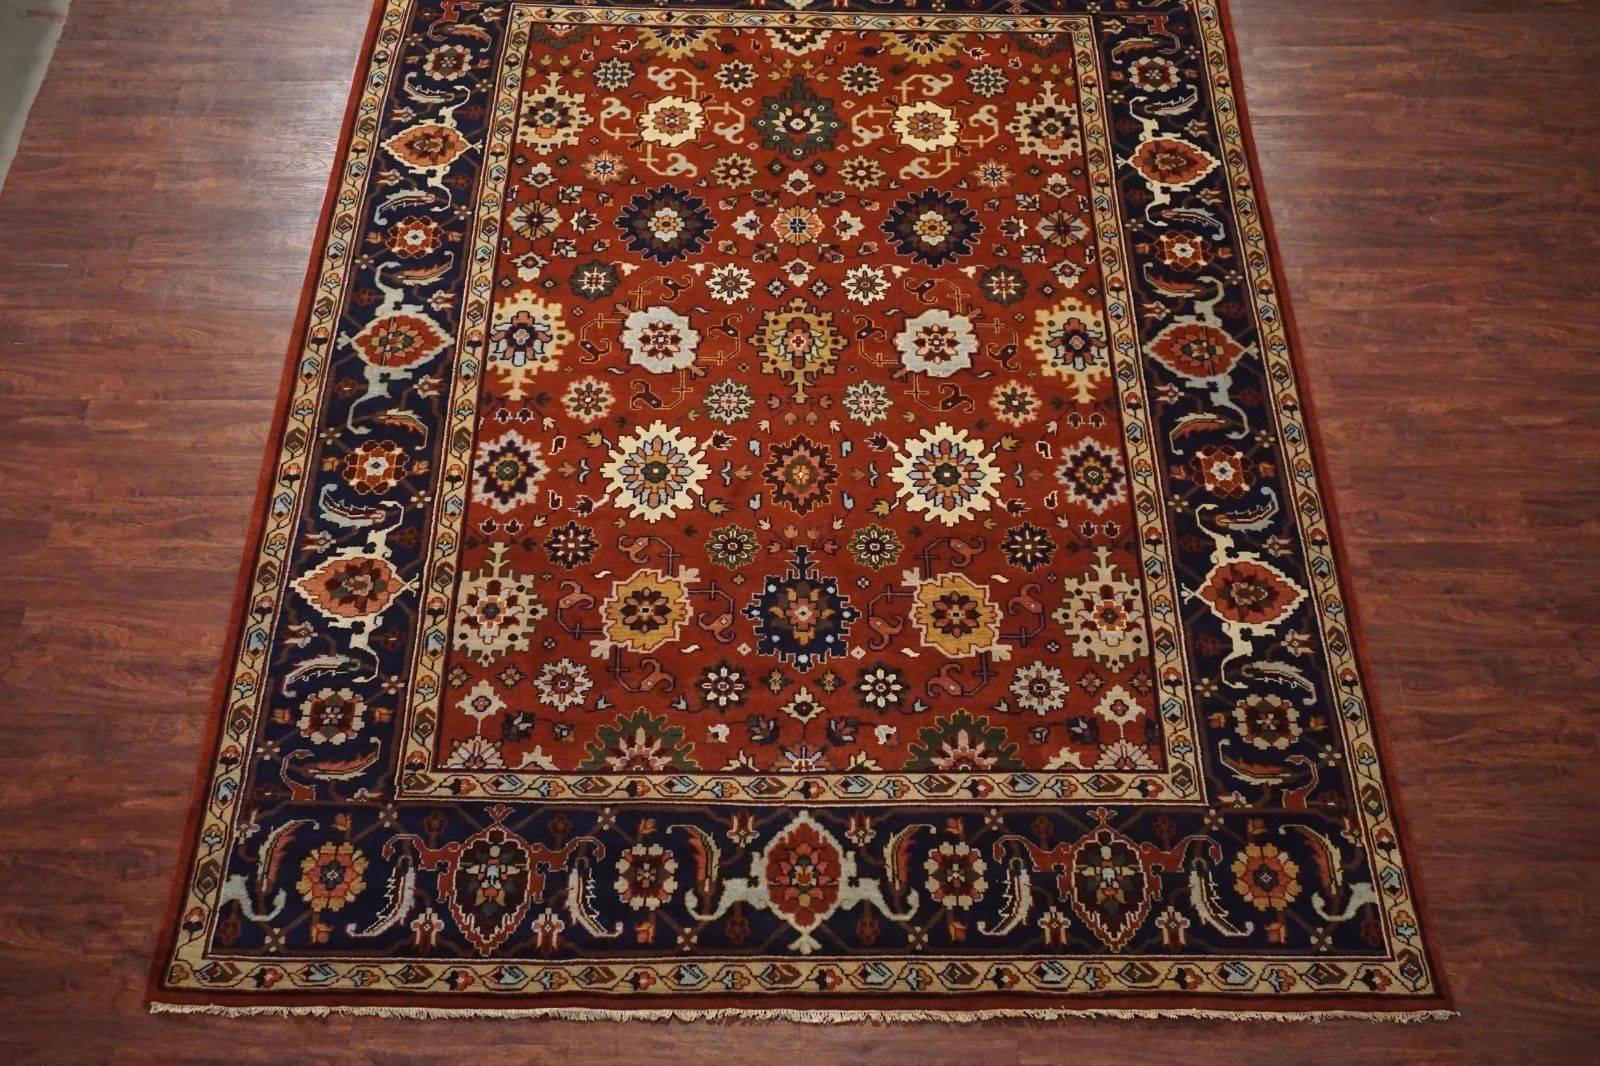 Vegetable dyed Mahal rug

circa 2015

Measures: 8' 10